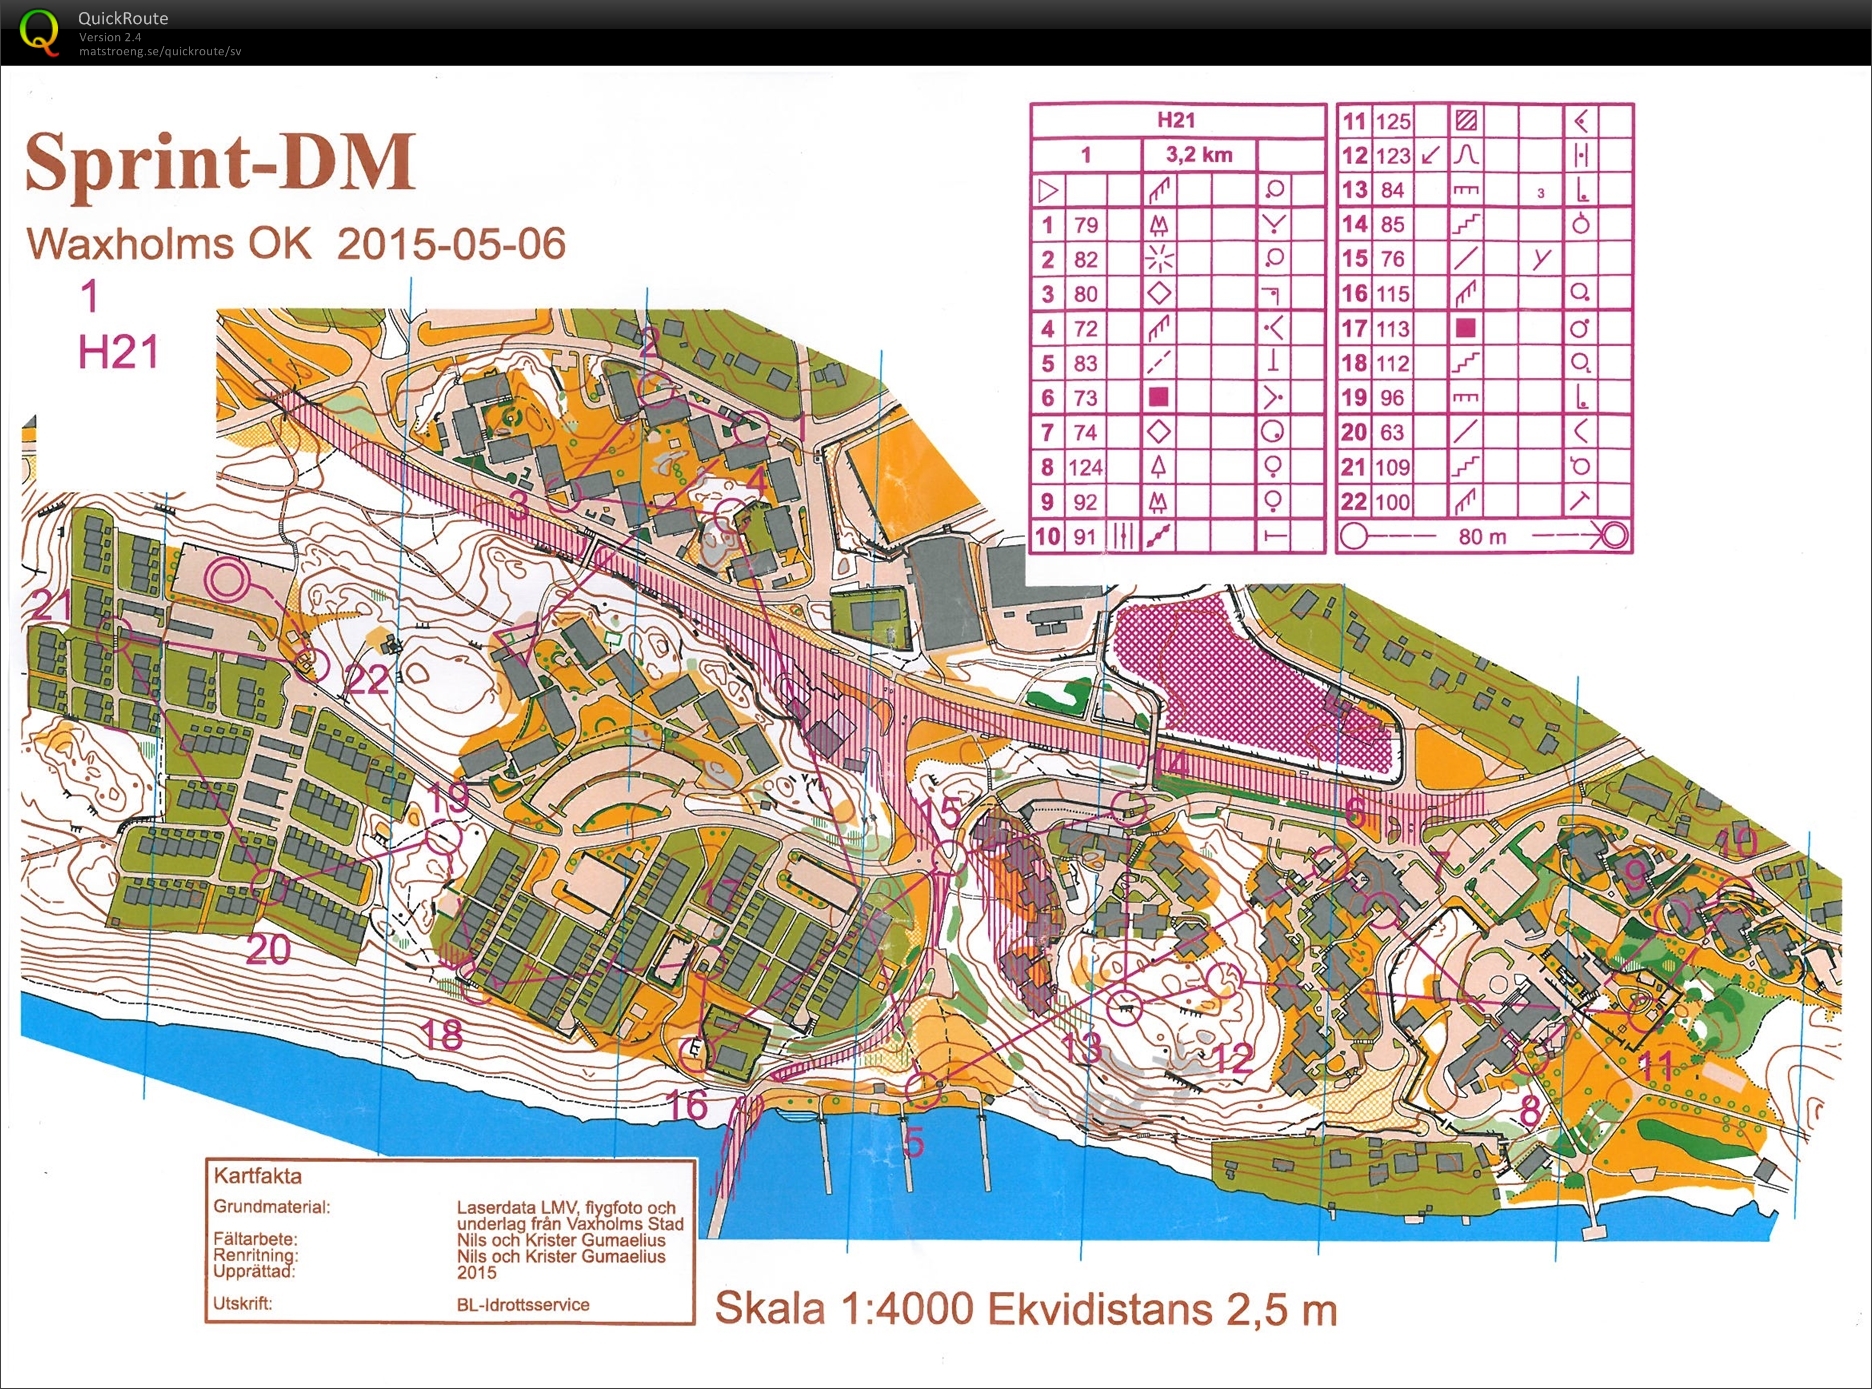 DM sprint Stockholm (H21) (2015-05-06)